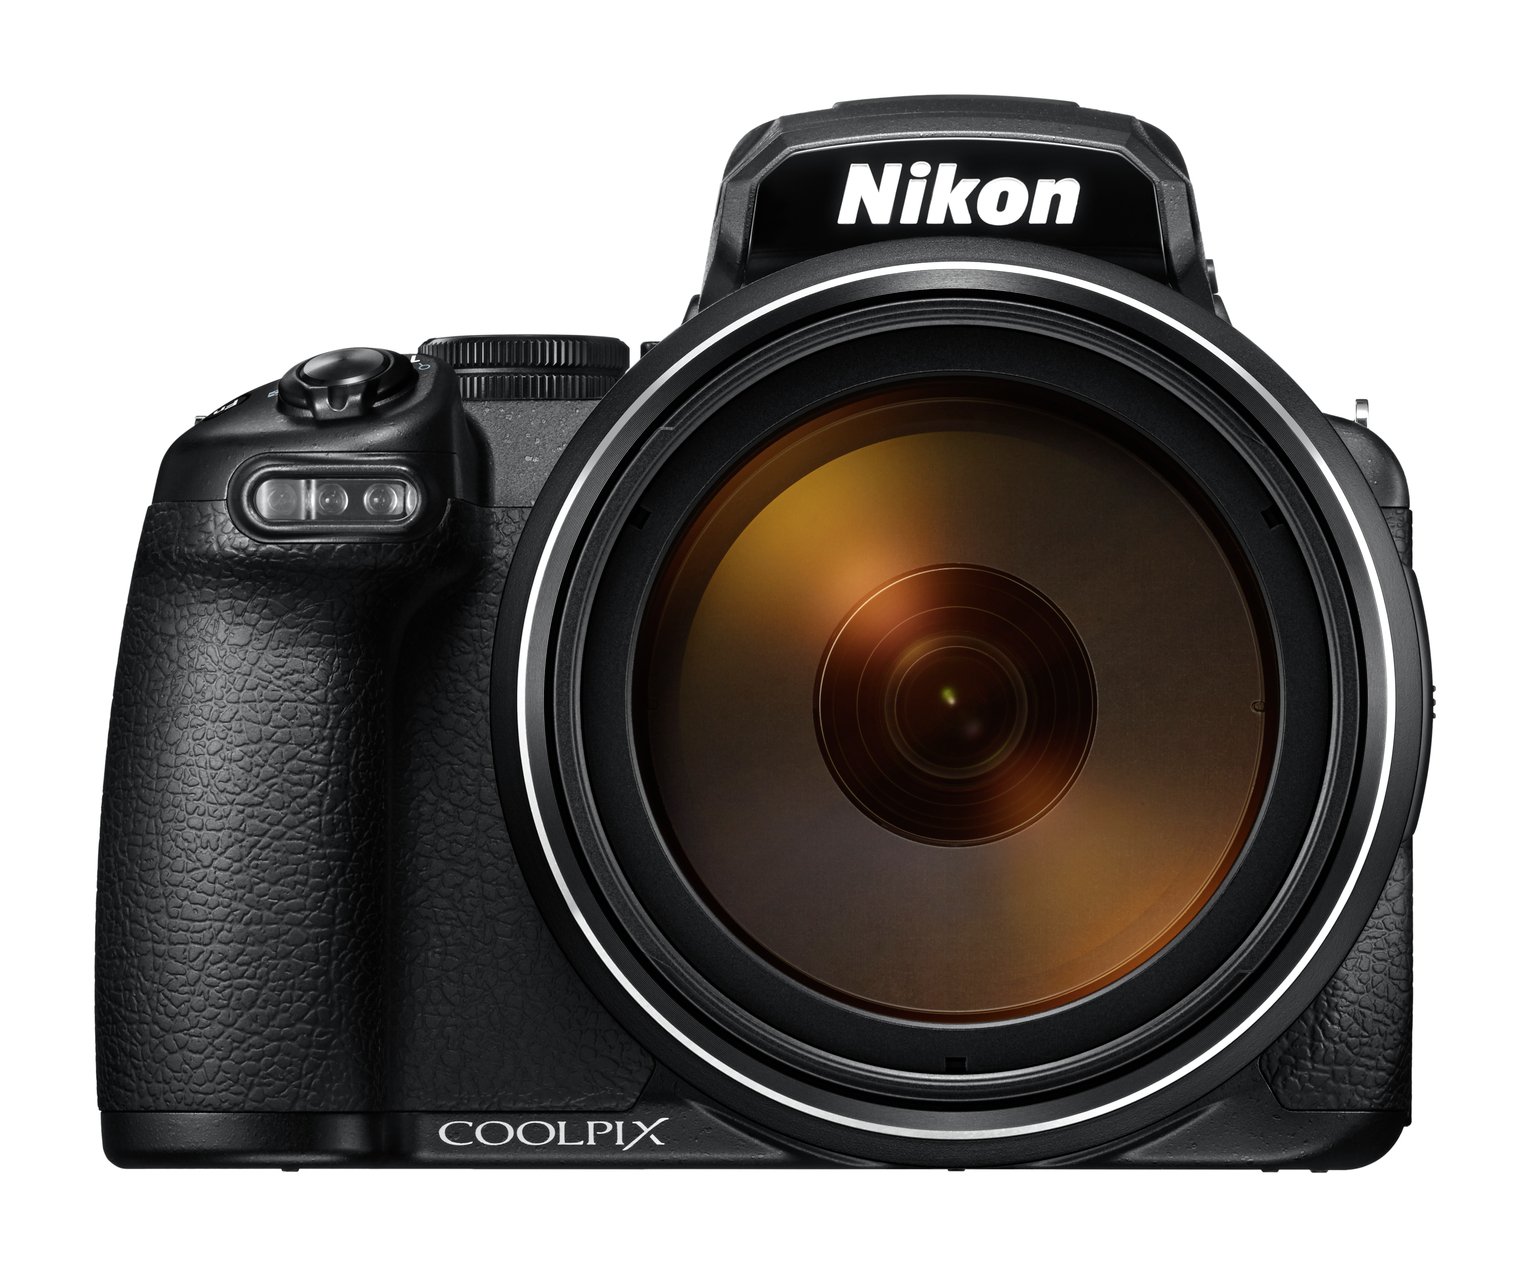 Nikon Coolpix P1000 Bridge Camera Review